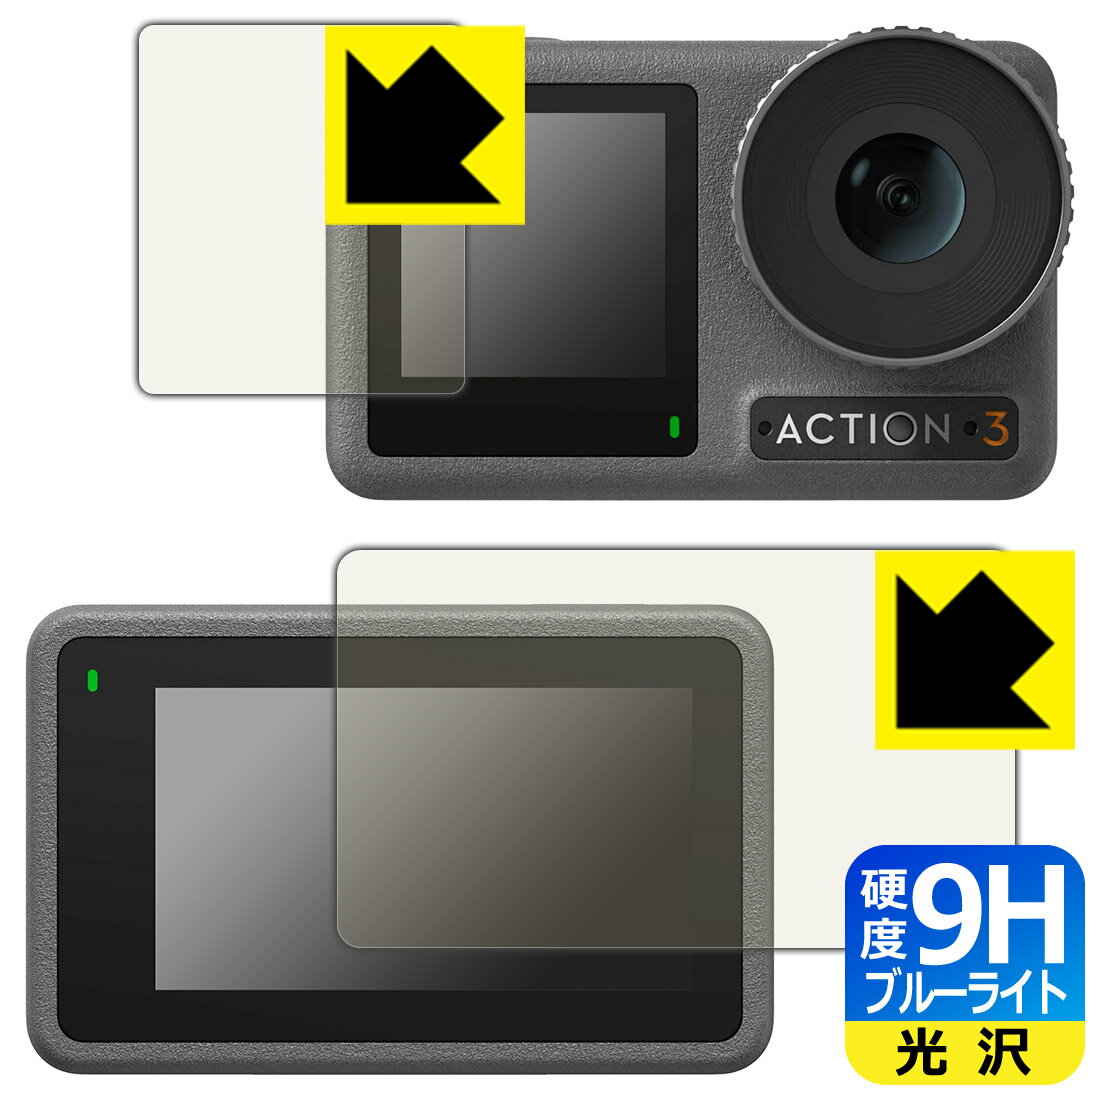 9H高硬度【ブルーライトカット】保護フィルム DJI Osmo Action 3 (メイン用/サブ用) 日本製 自社製造直販